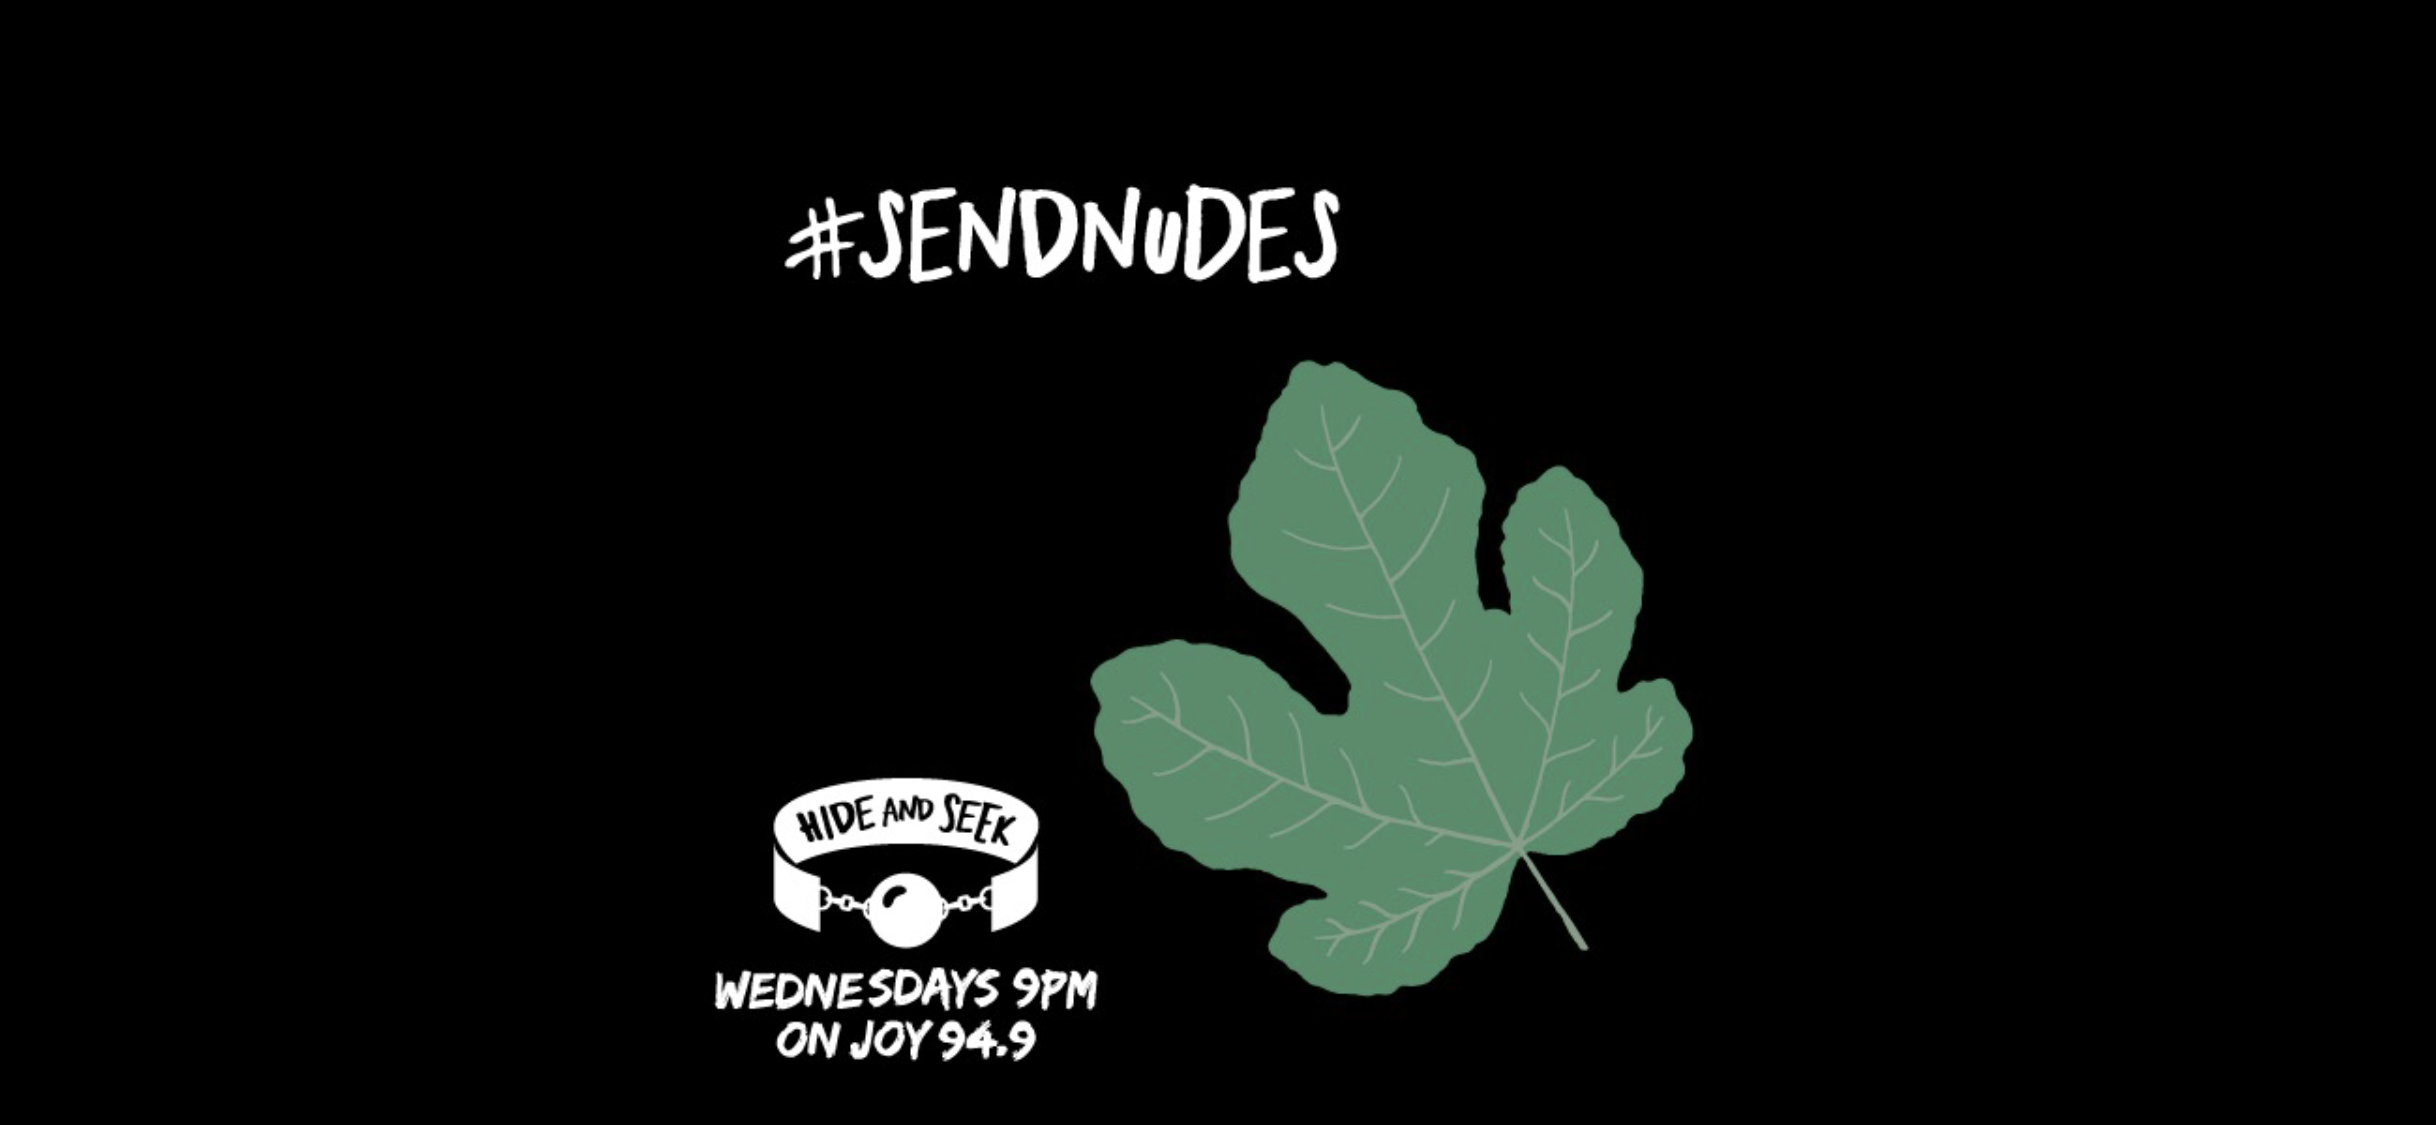 13. “#SendNudes” – Nudism